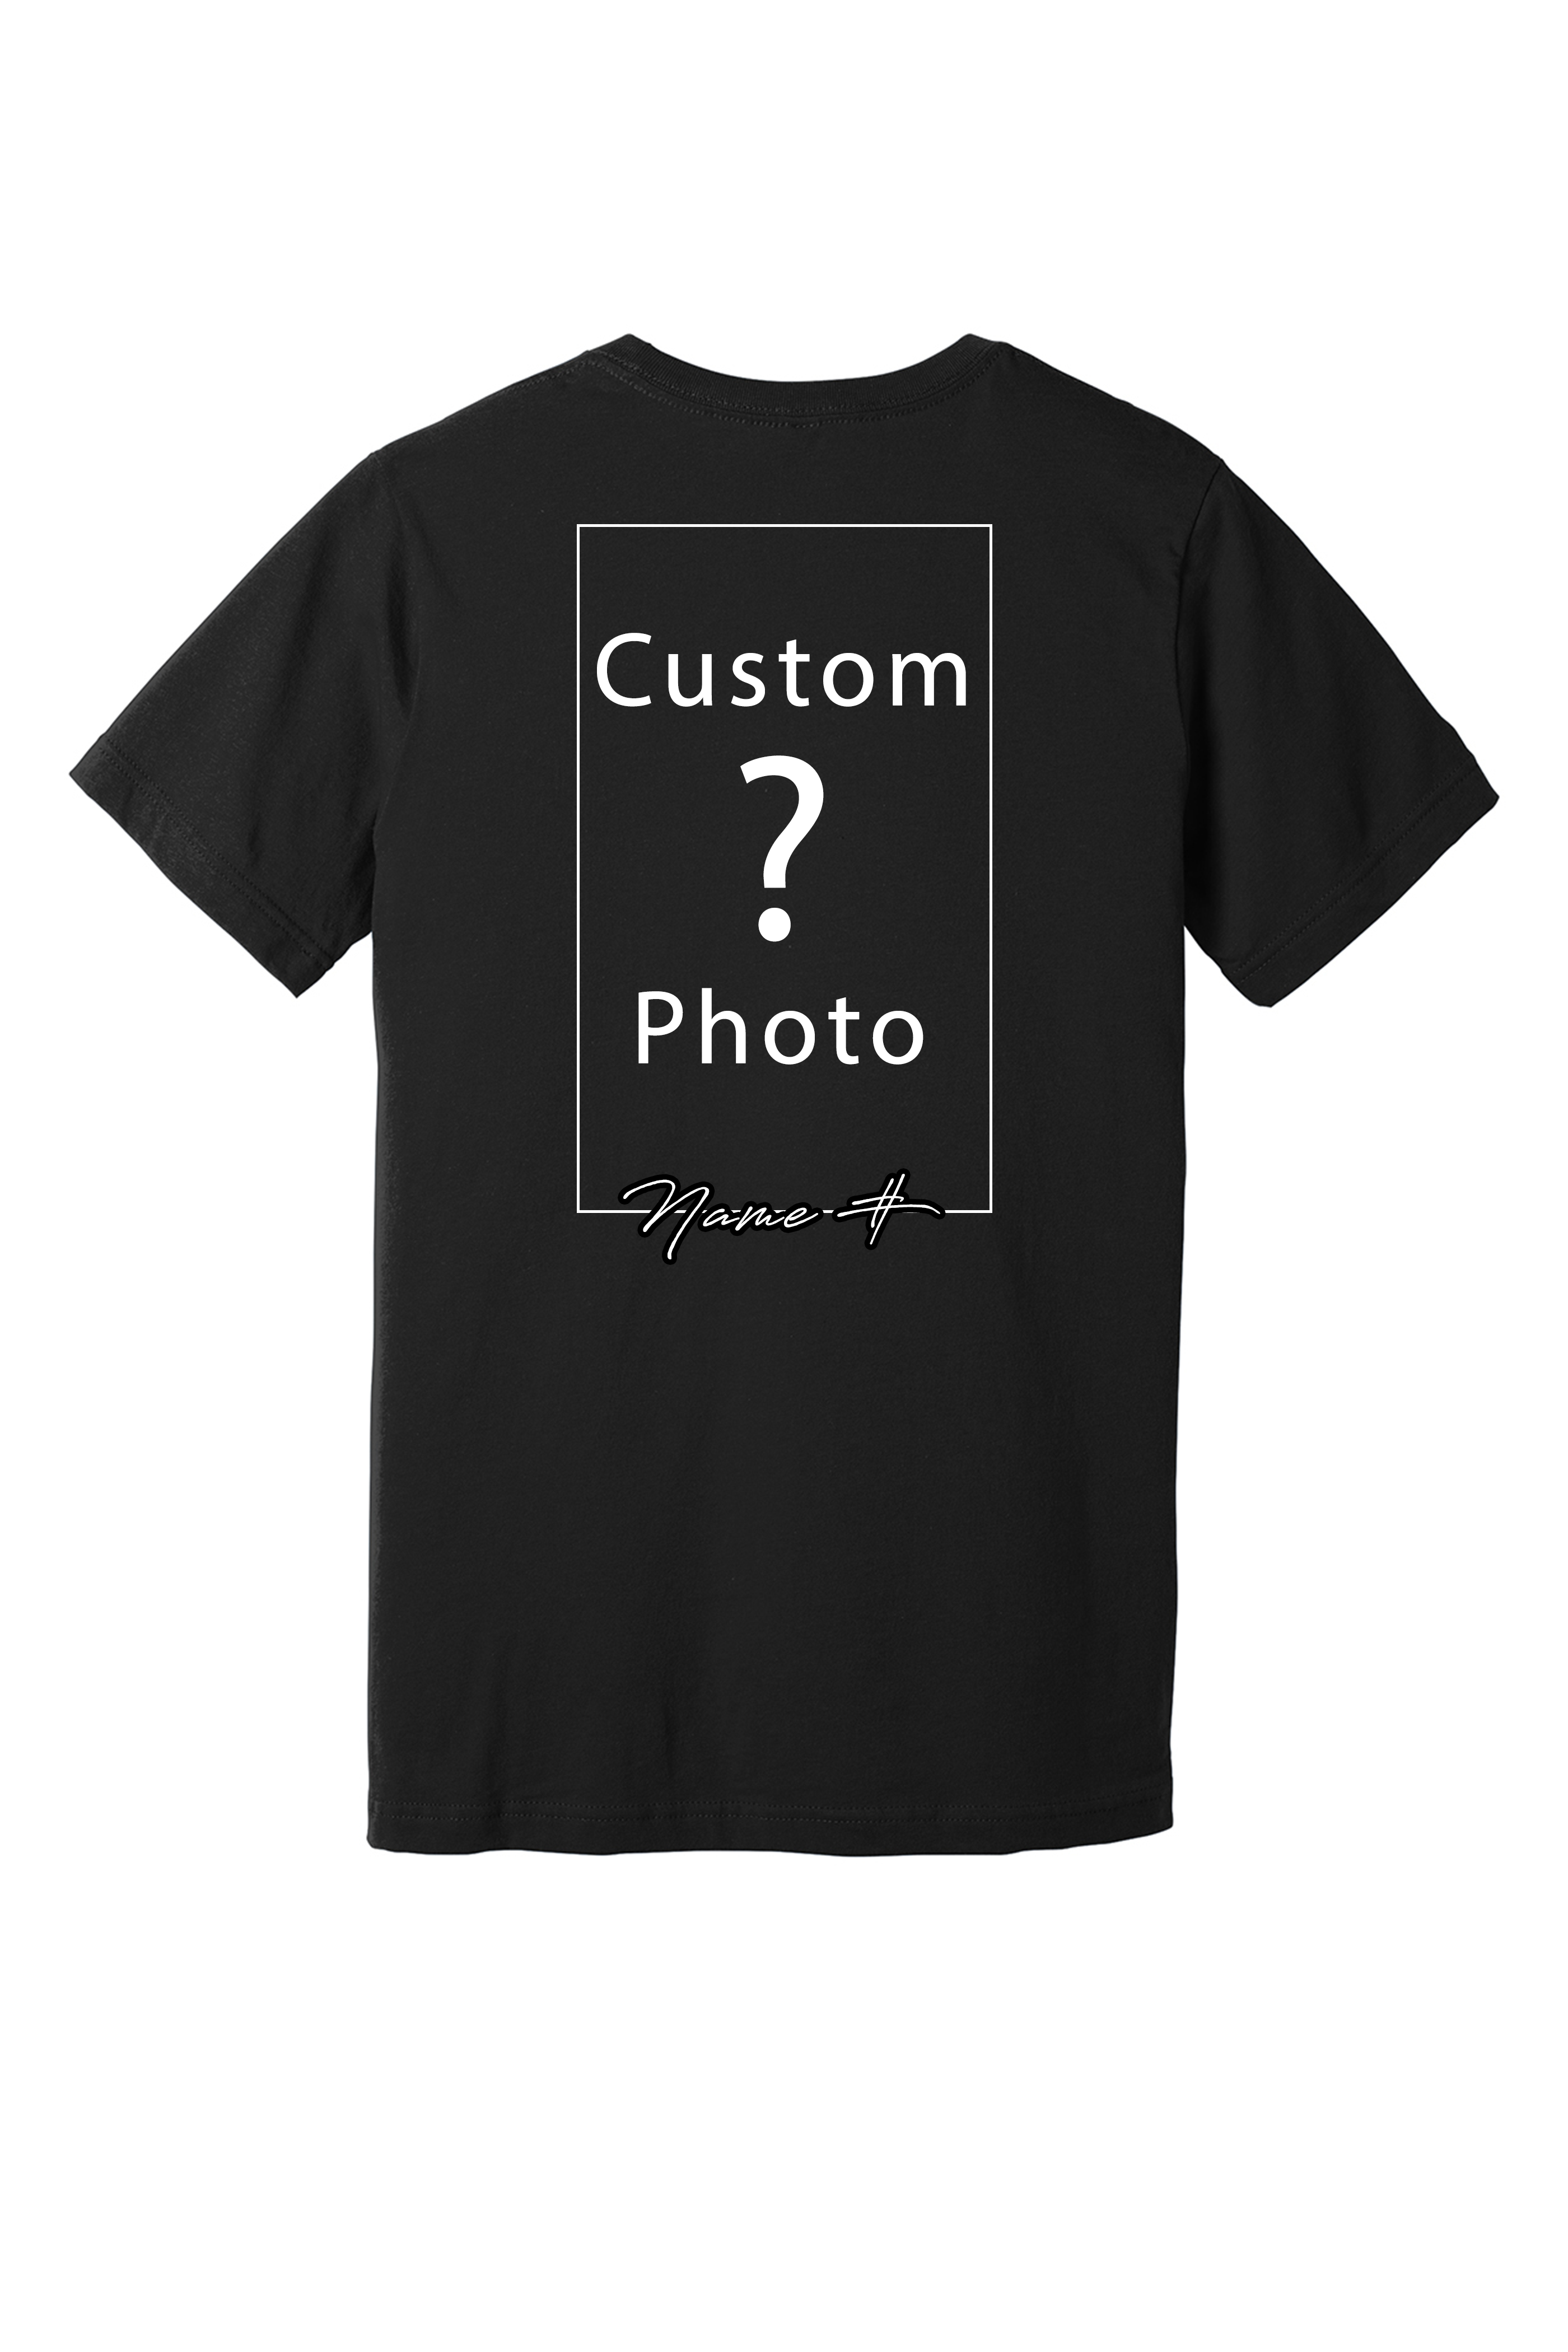 Ericson Mati Photography - Custom Photo T-Shirt